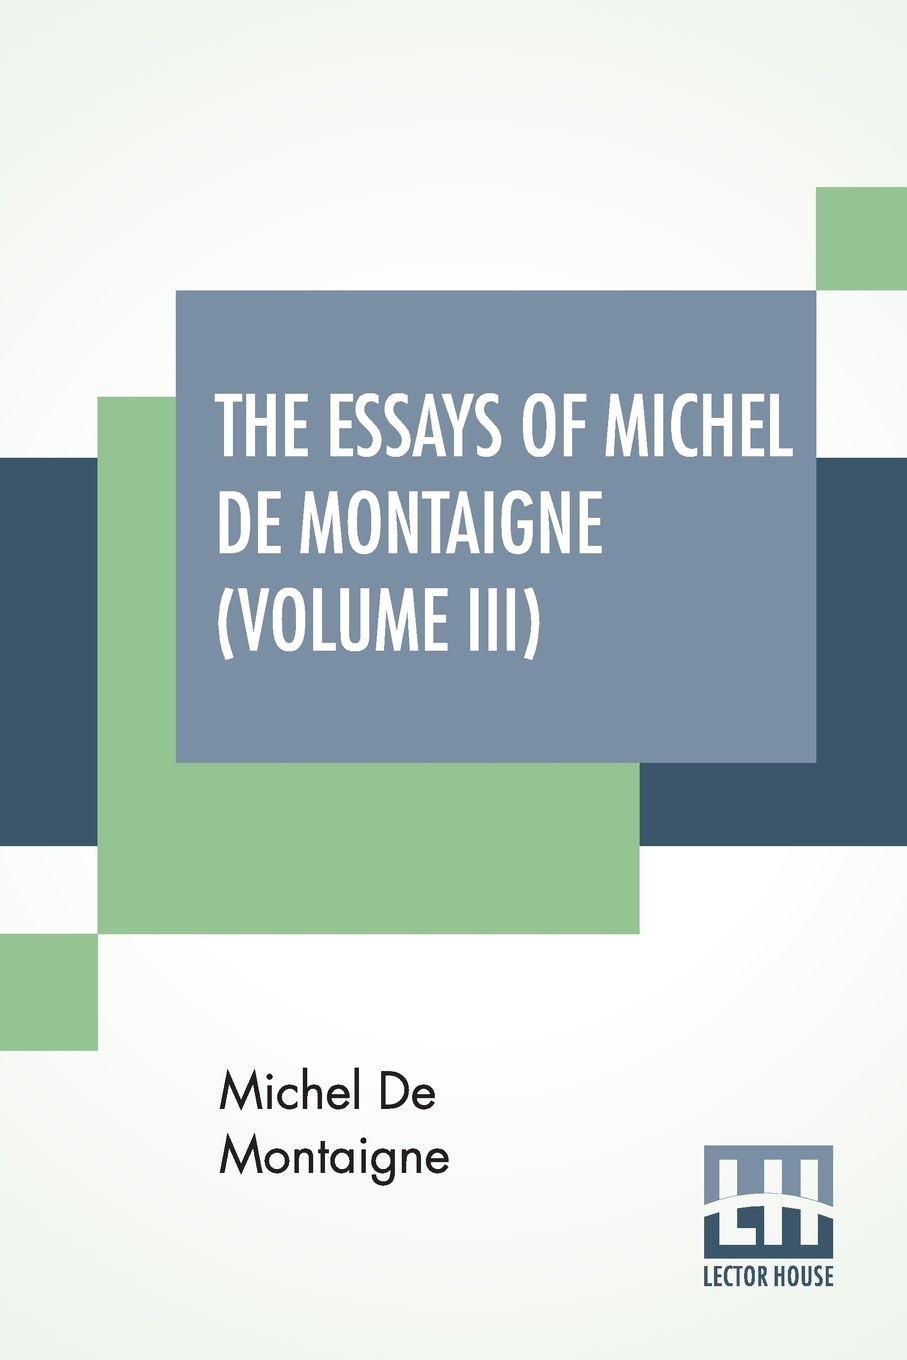 The Essays Of Michel De Montaigne (Volume III). Translated By Charles Cotton. Edited By William Carew Hazlitt.